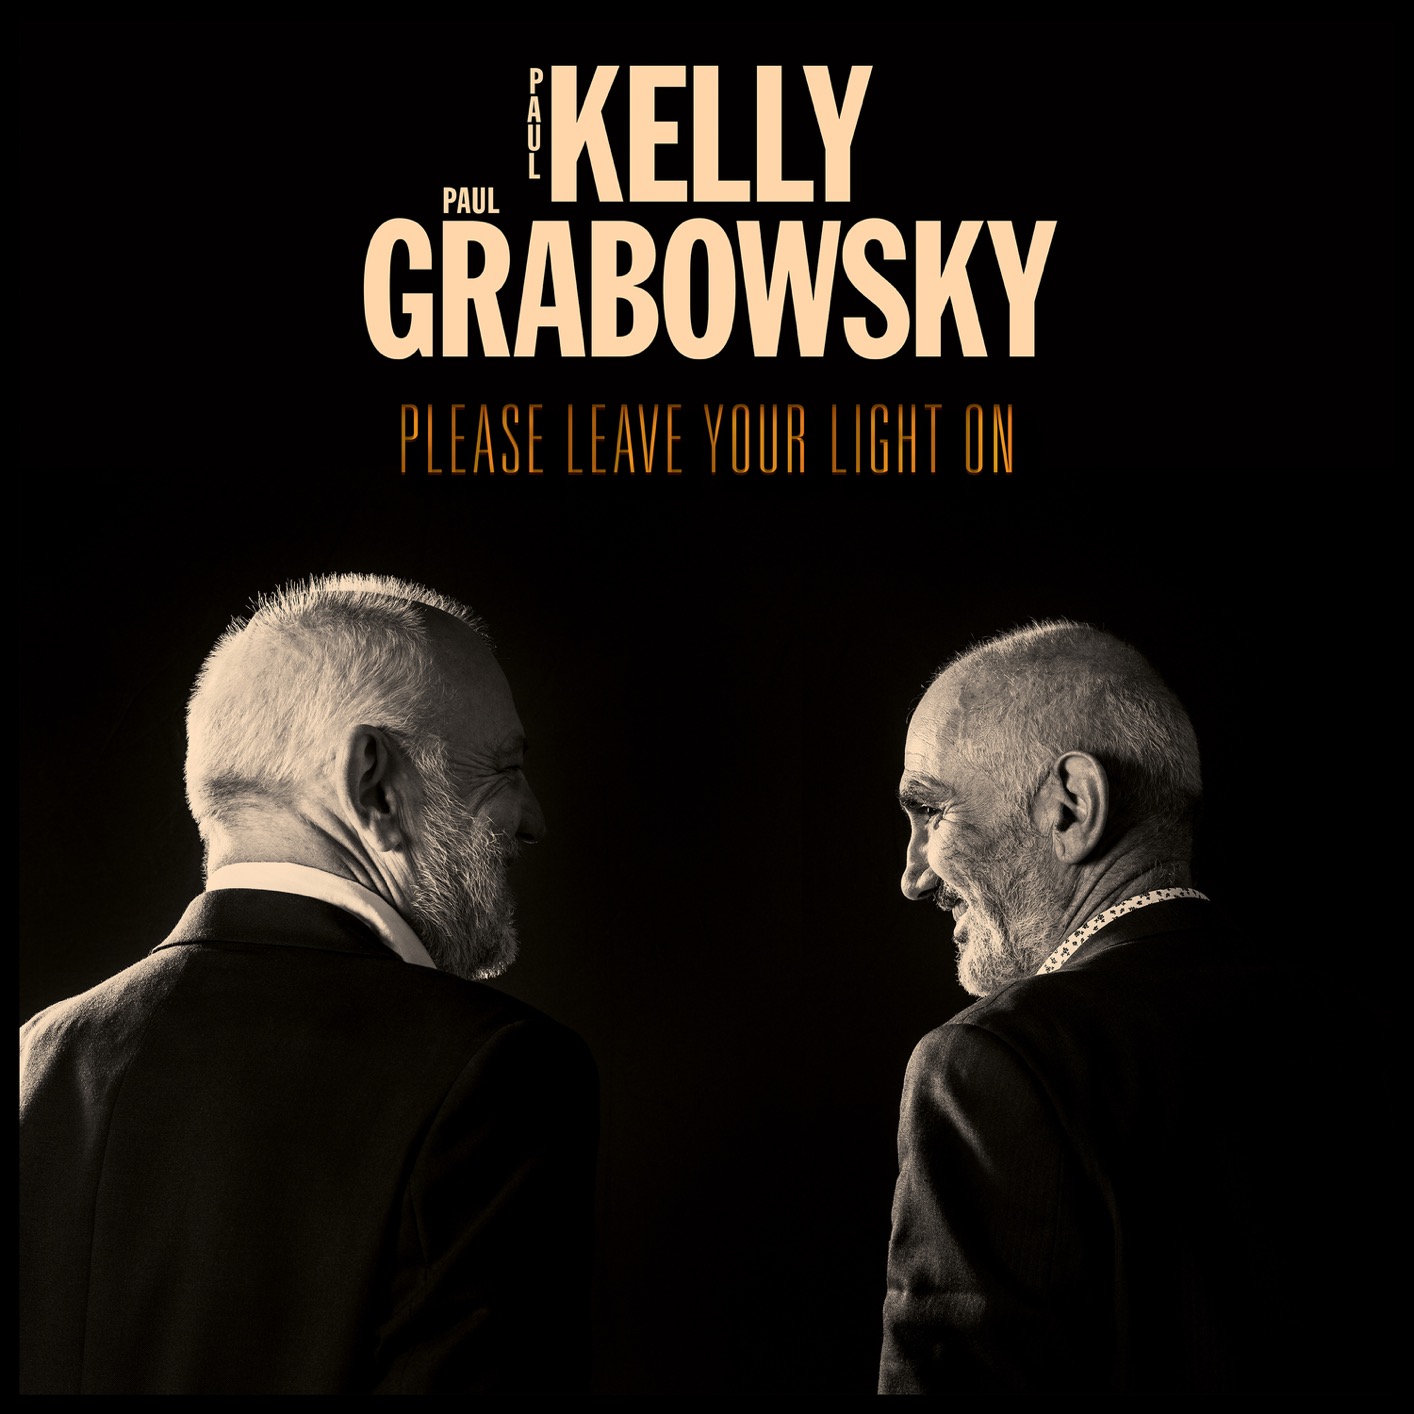 Paul Kelly & Paul Grabowsky - Please Leave Your Light On (2020) [FLAC 24bit/48kHz]